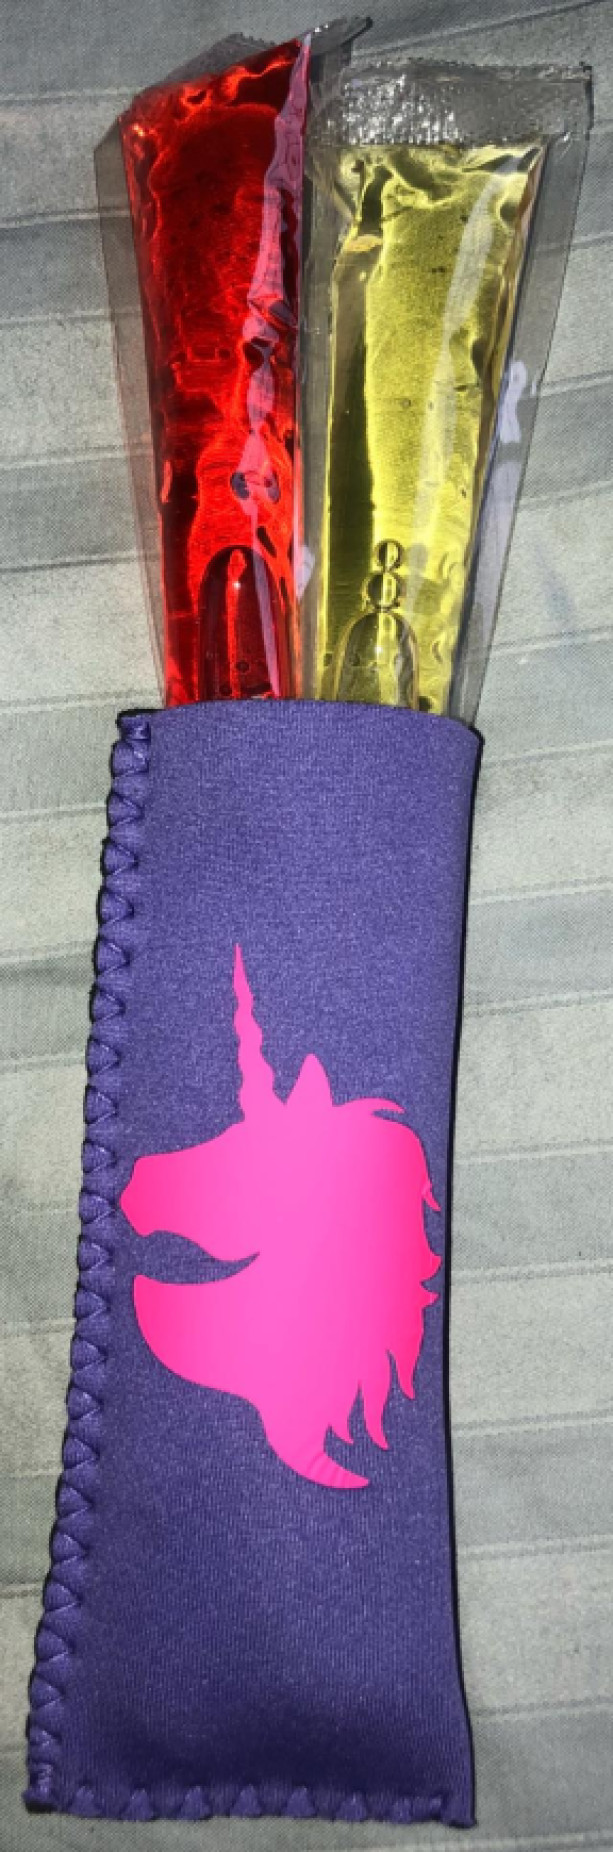 Purple Neoprene Freeze Pop Holder with Pink Unicorn and 2 freeze pops handmade